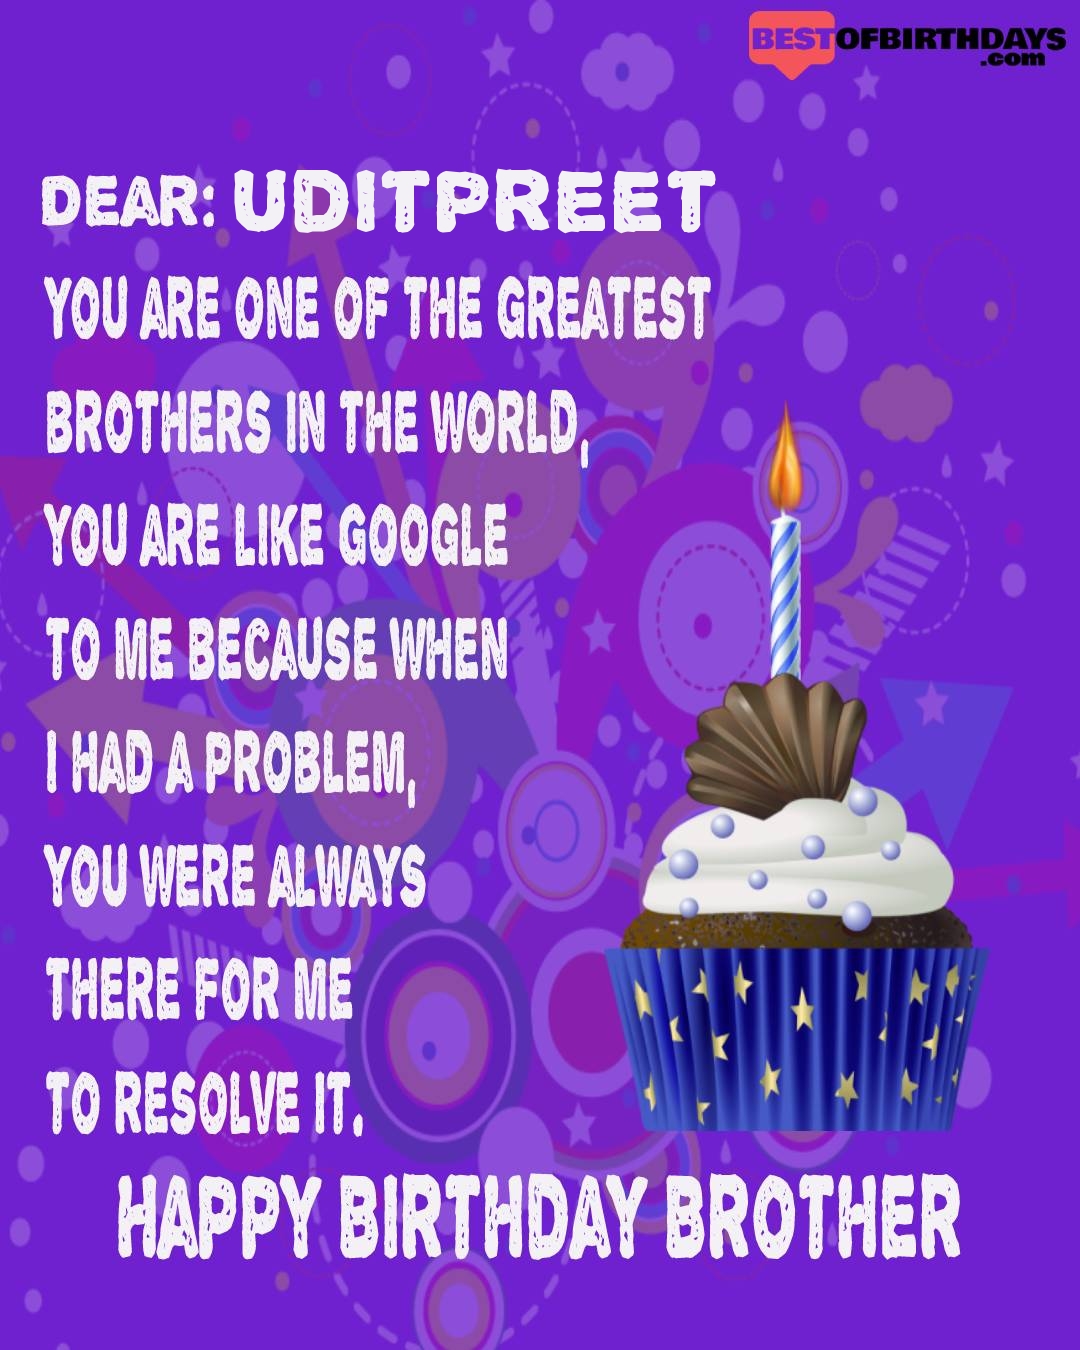 Happy birthday uditpreet bhai brother bro